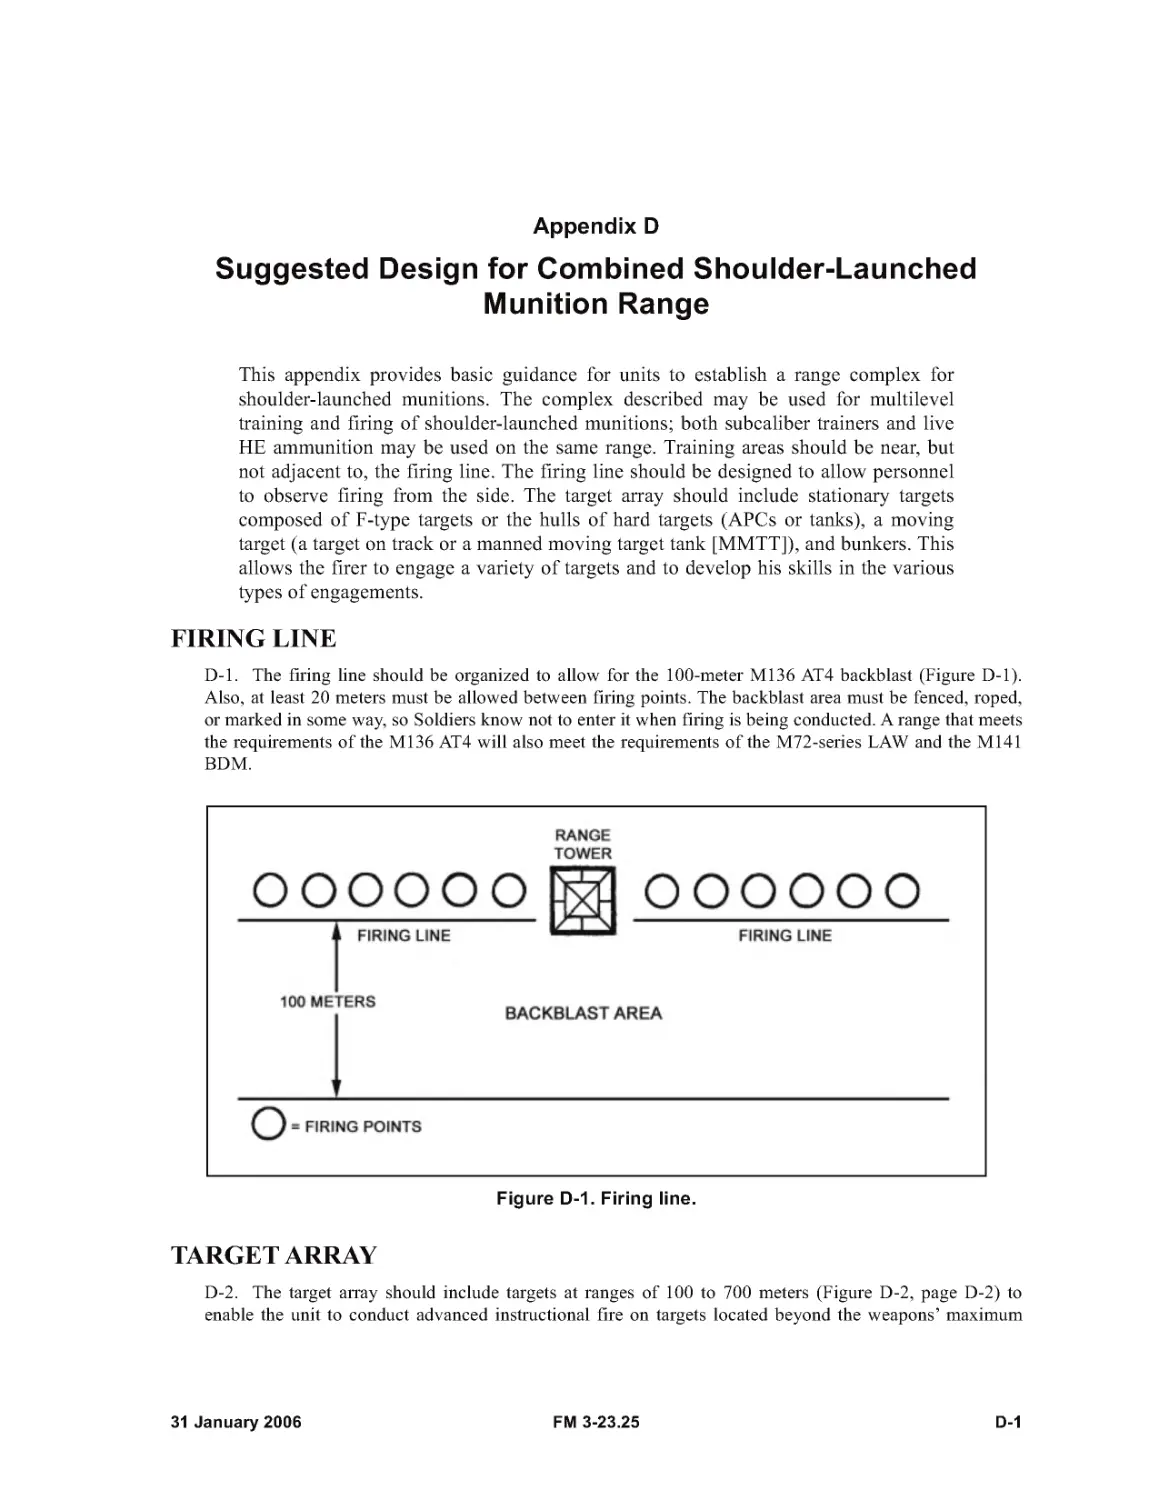 Figure D-1. Firing line.
Appendix D - Suggested Design for Combined Shoulder-Launched Munition Range
TARGET ARRAY